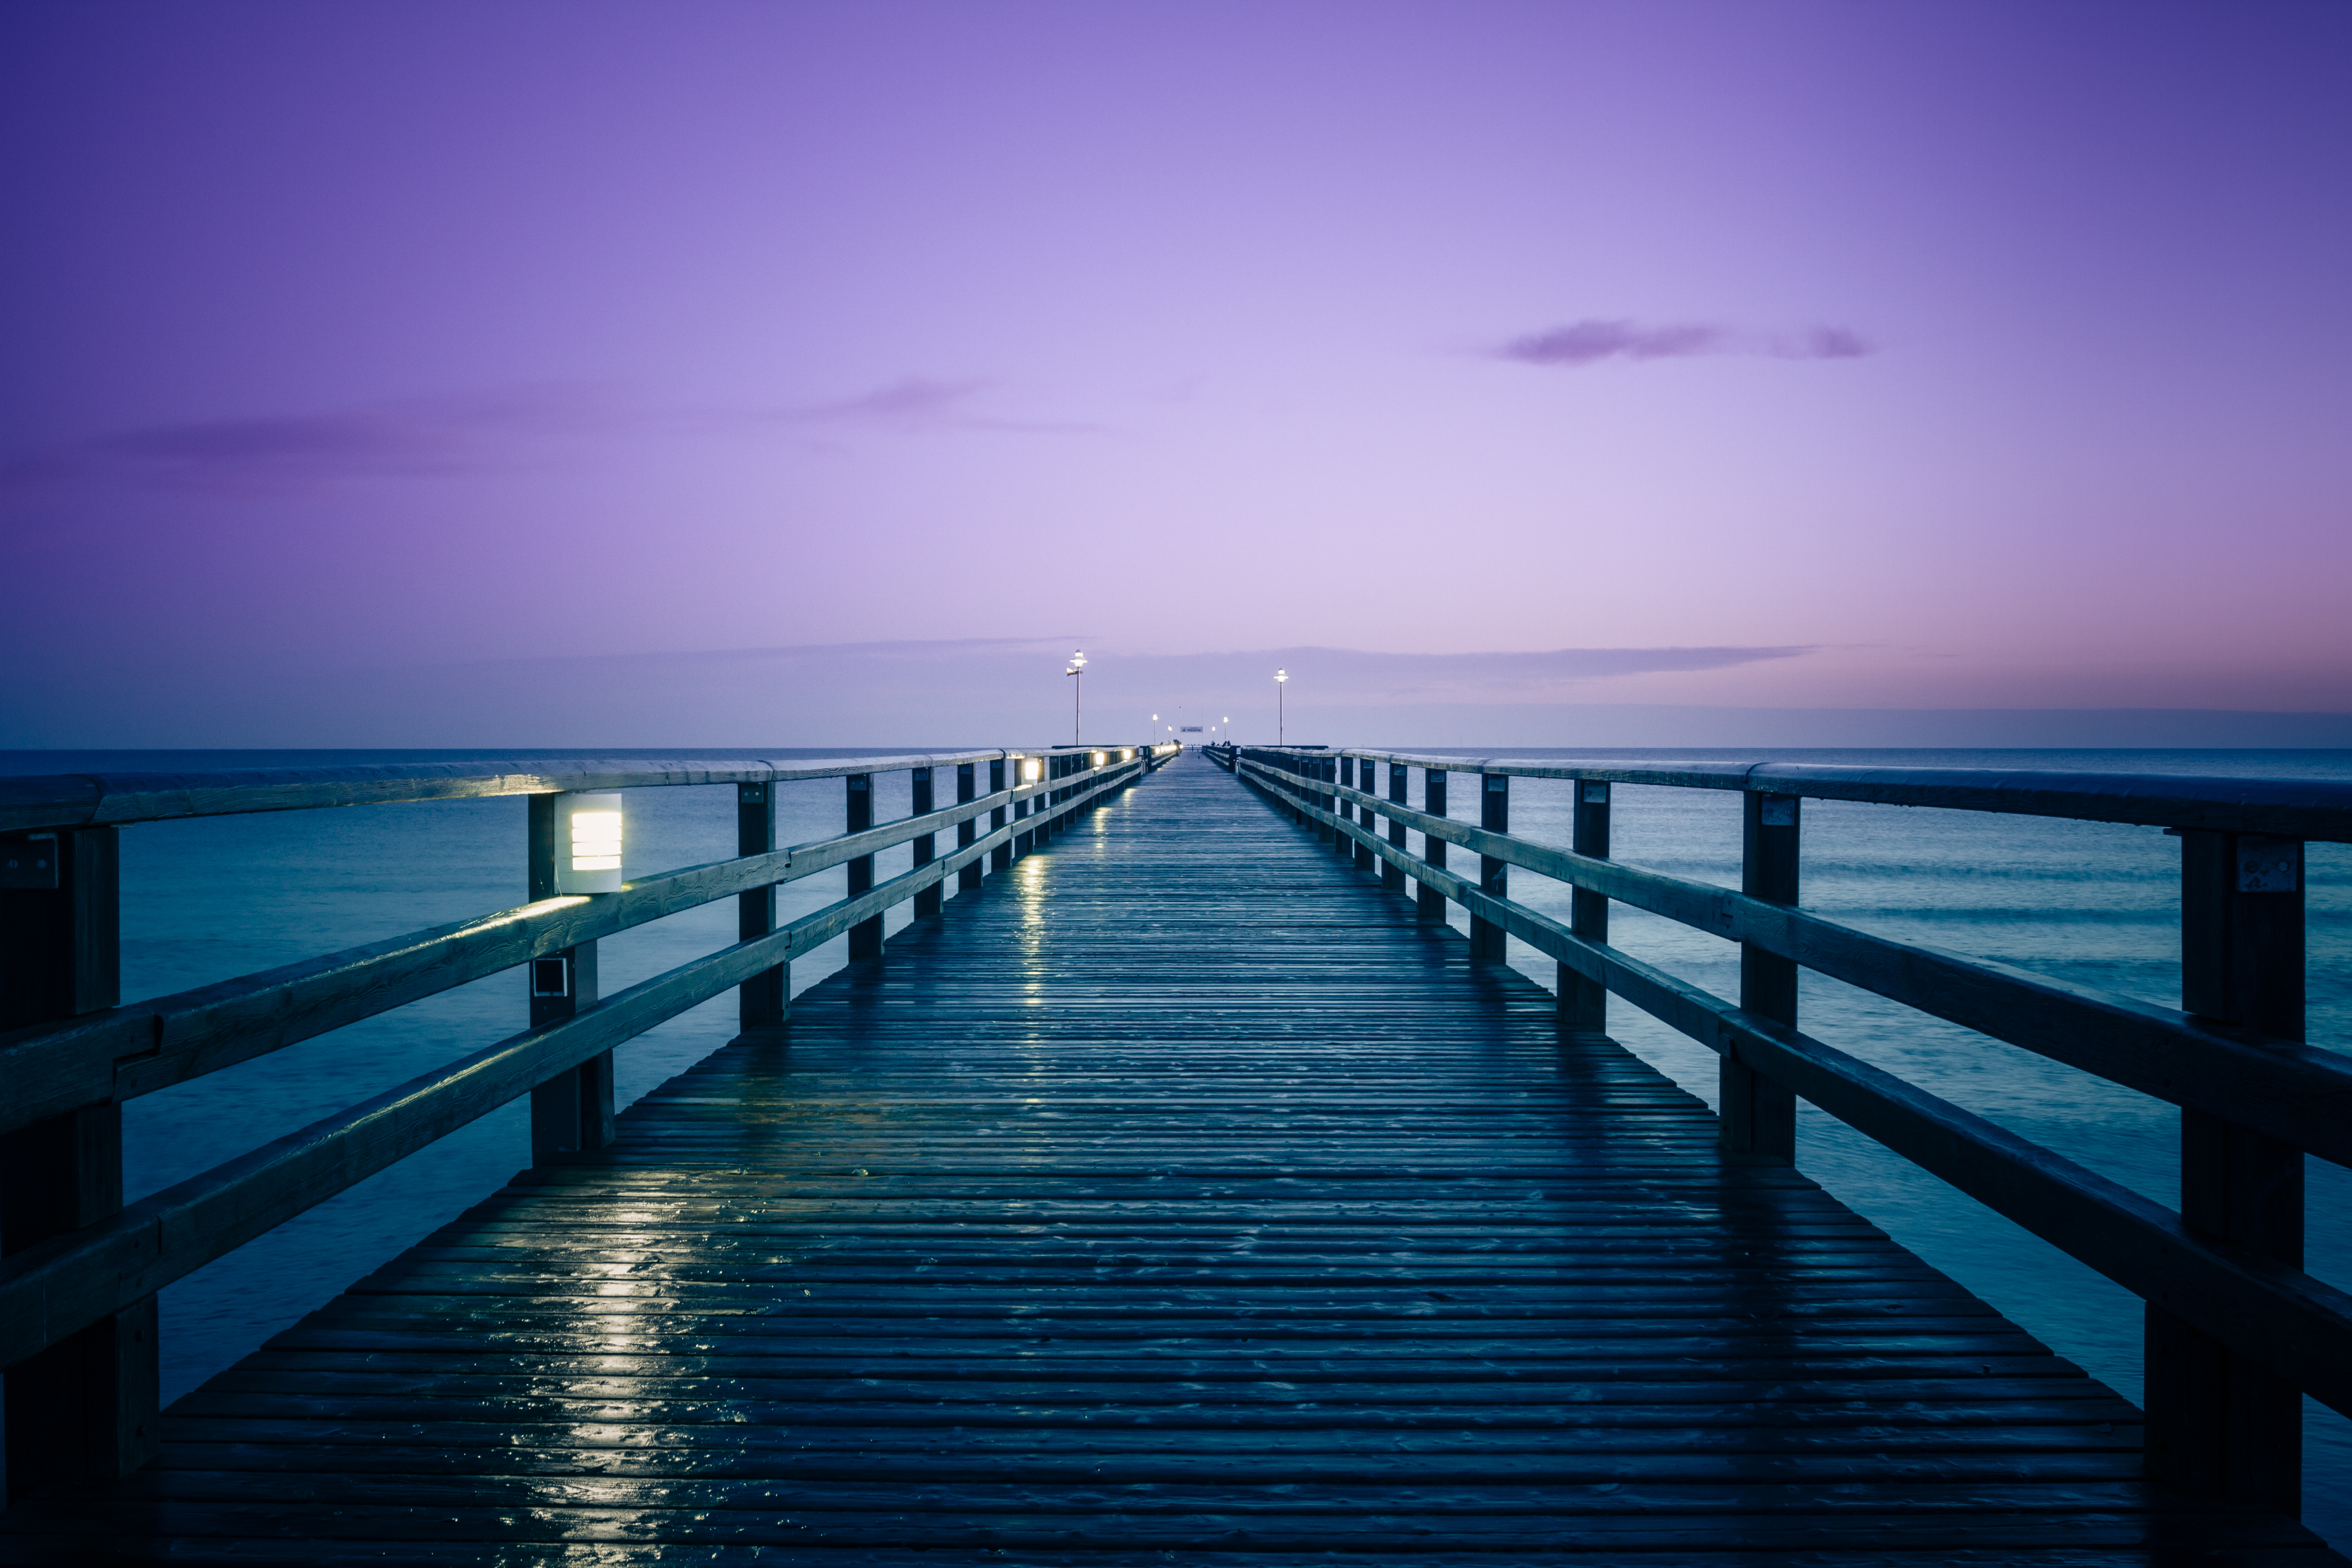 Download 5184x3456 pier, horizon, sea, dark, purple, blue wallpaper, backgr...